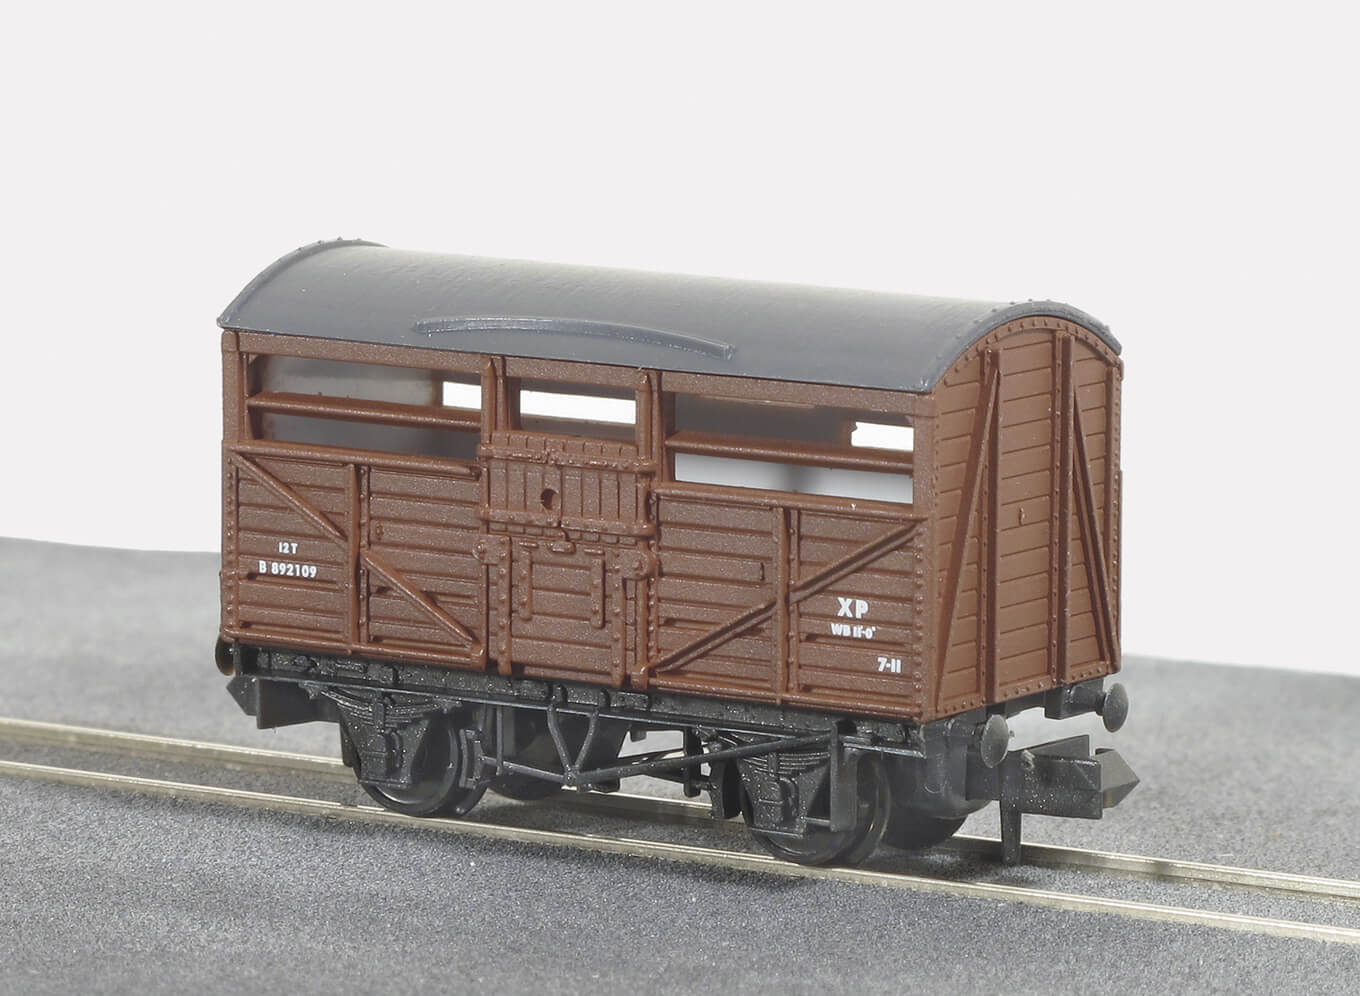 Cattle Wagon No. B892109